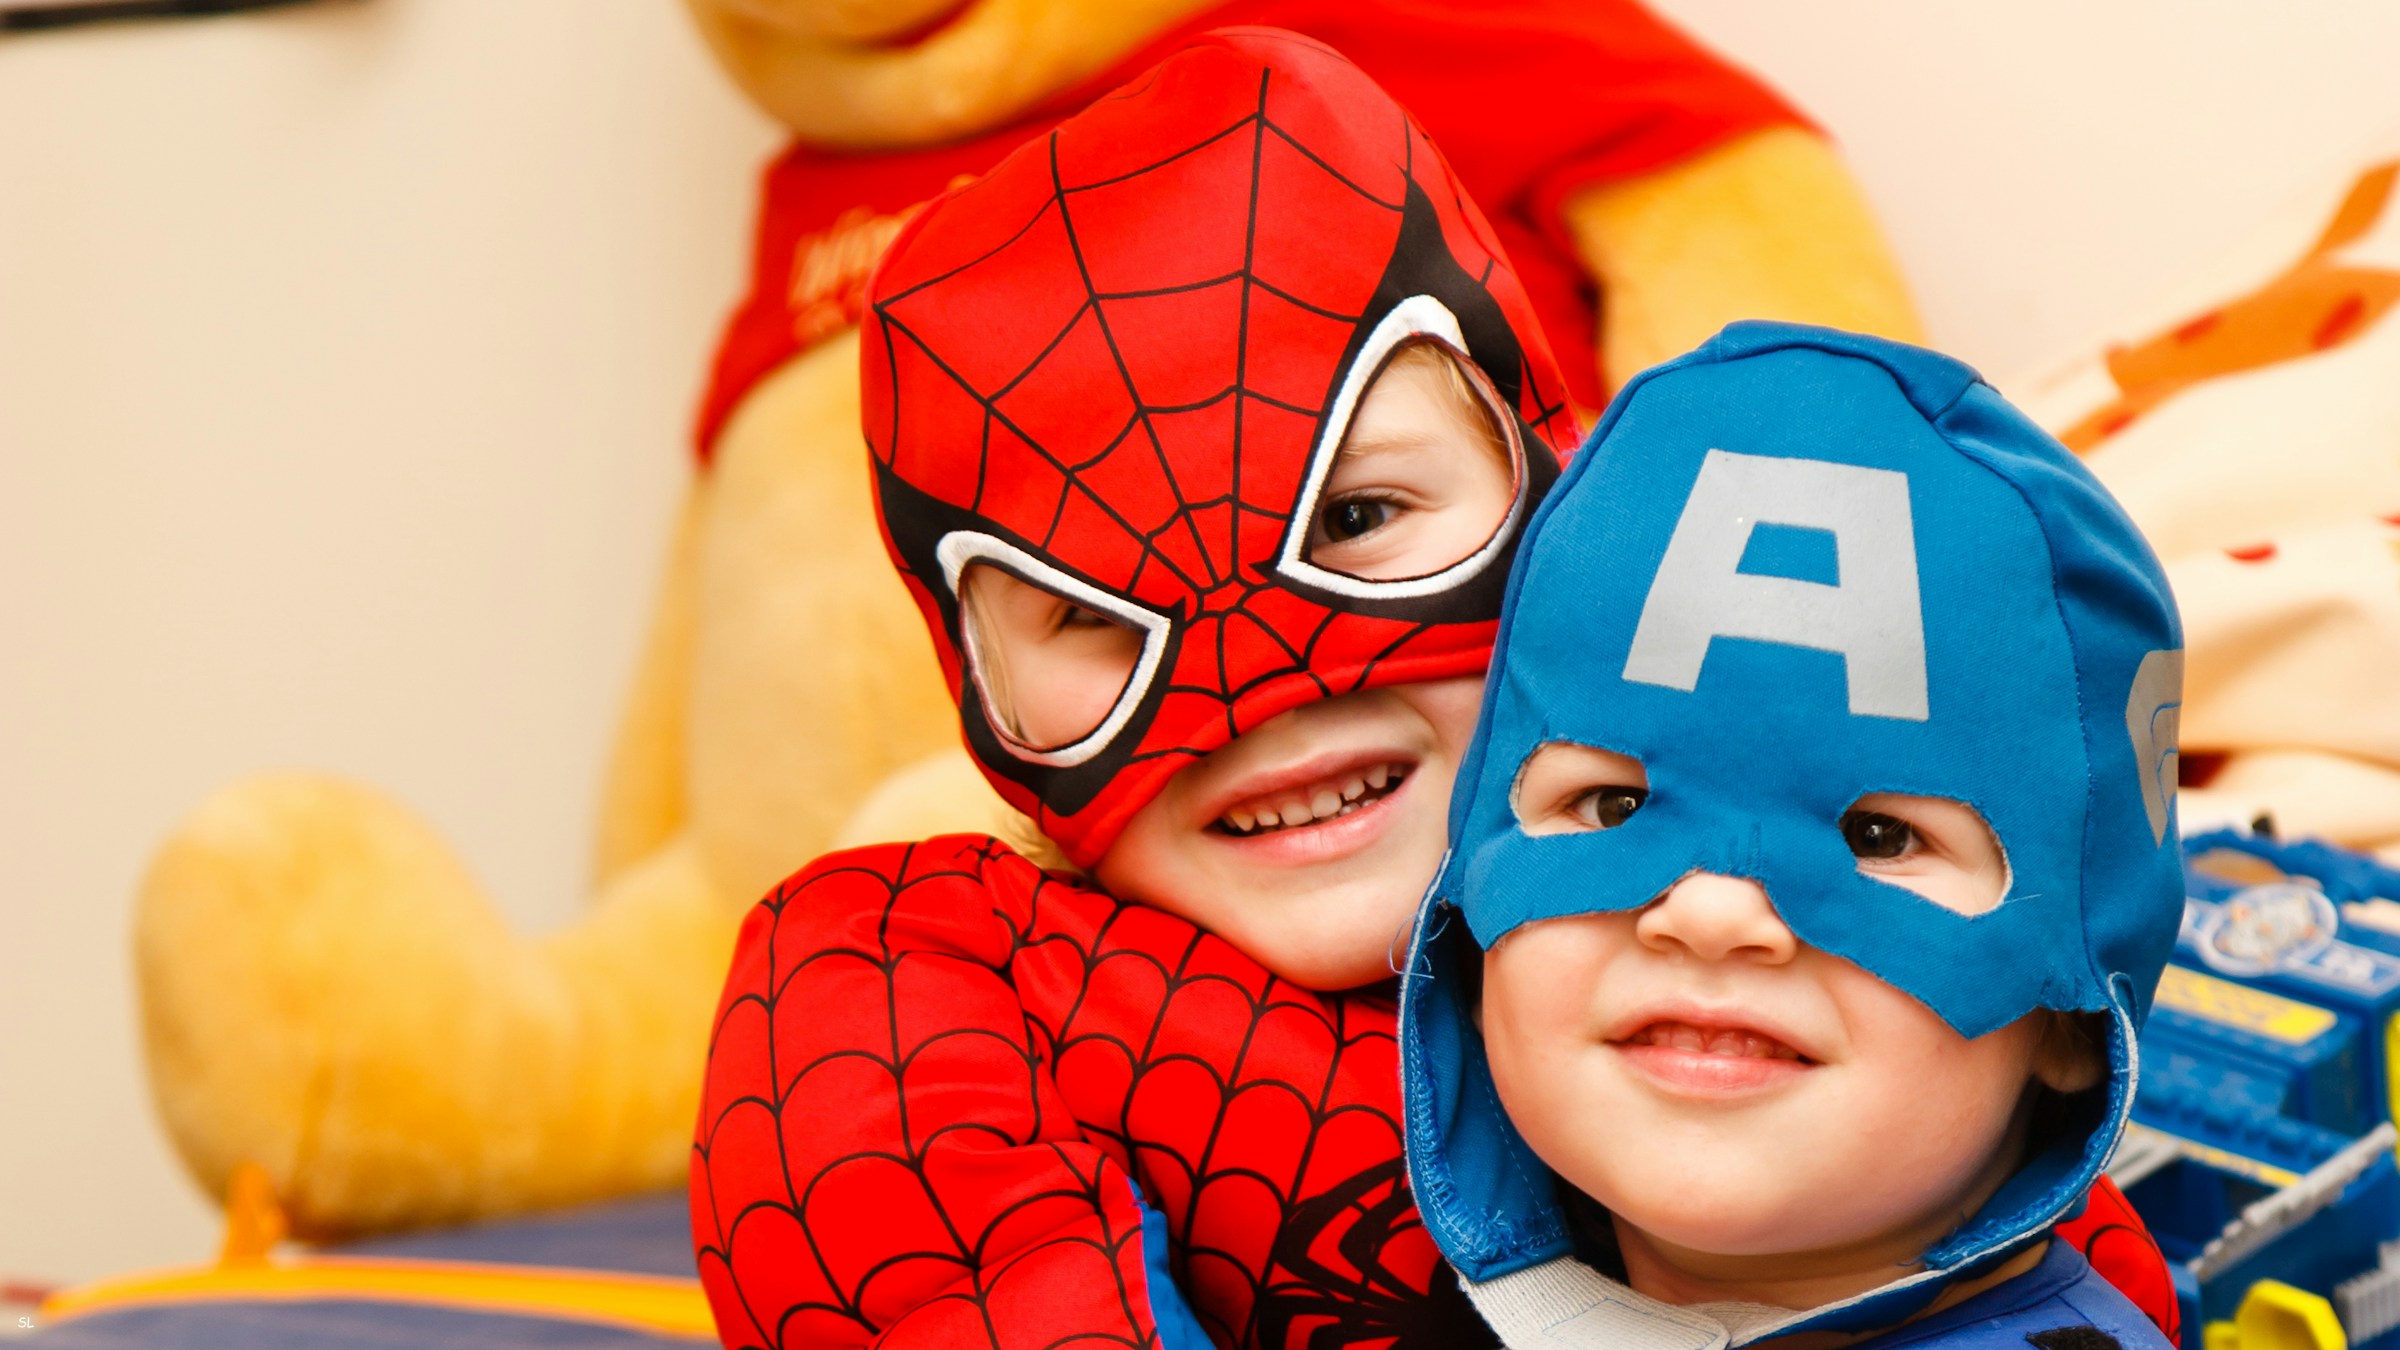 Children dressed as superheroes | Source: Unsplash